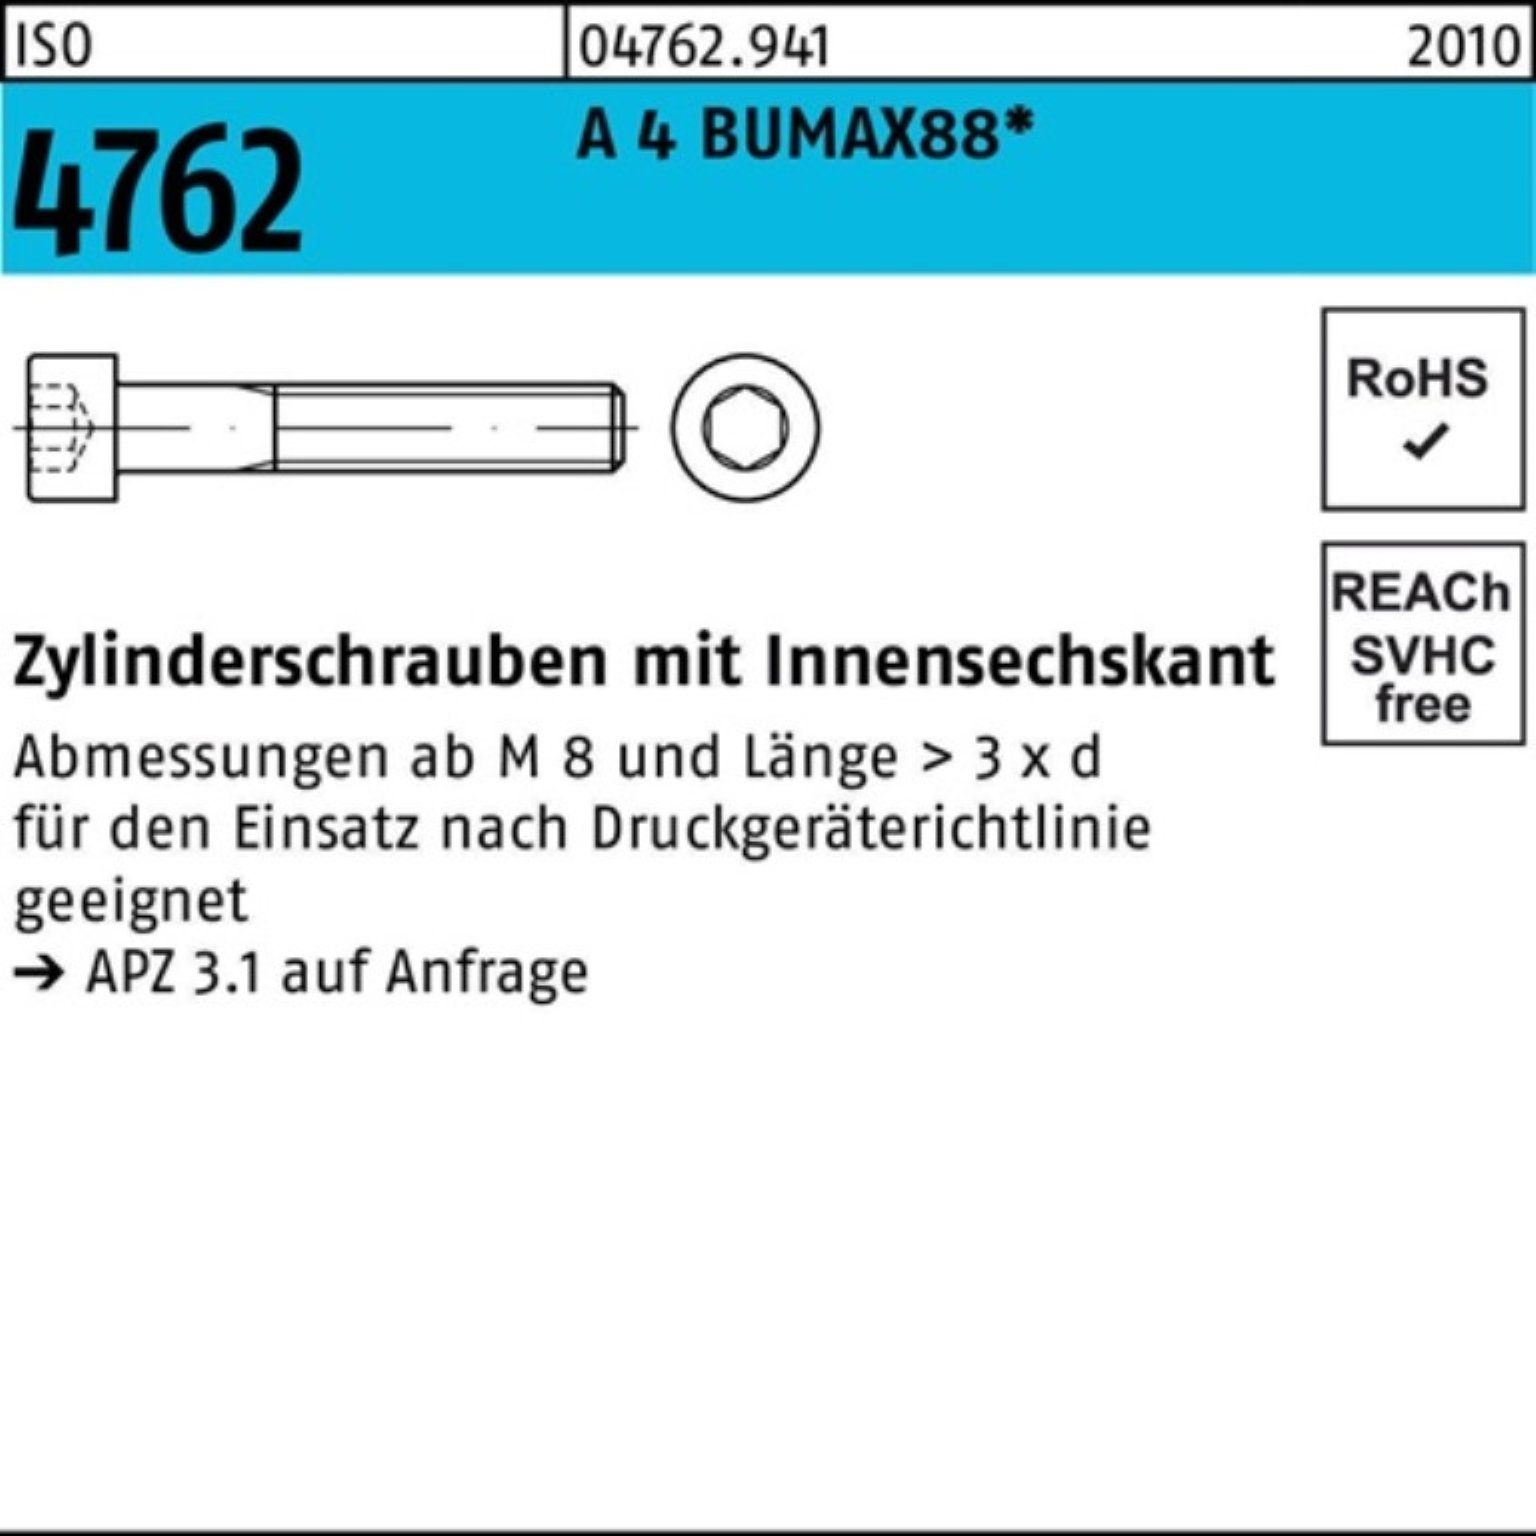 Bufab Zylinderschraube 100er Pack M6x BUMAX88 A 4 4762 Innen-6kt 100 Zylinderschraube ISO 30